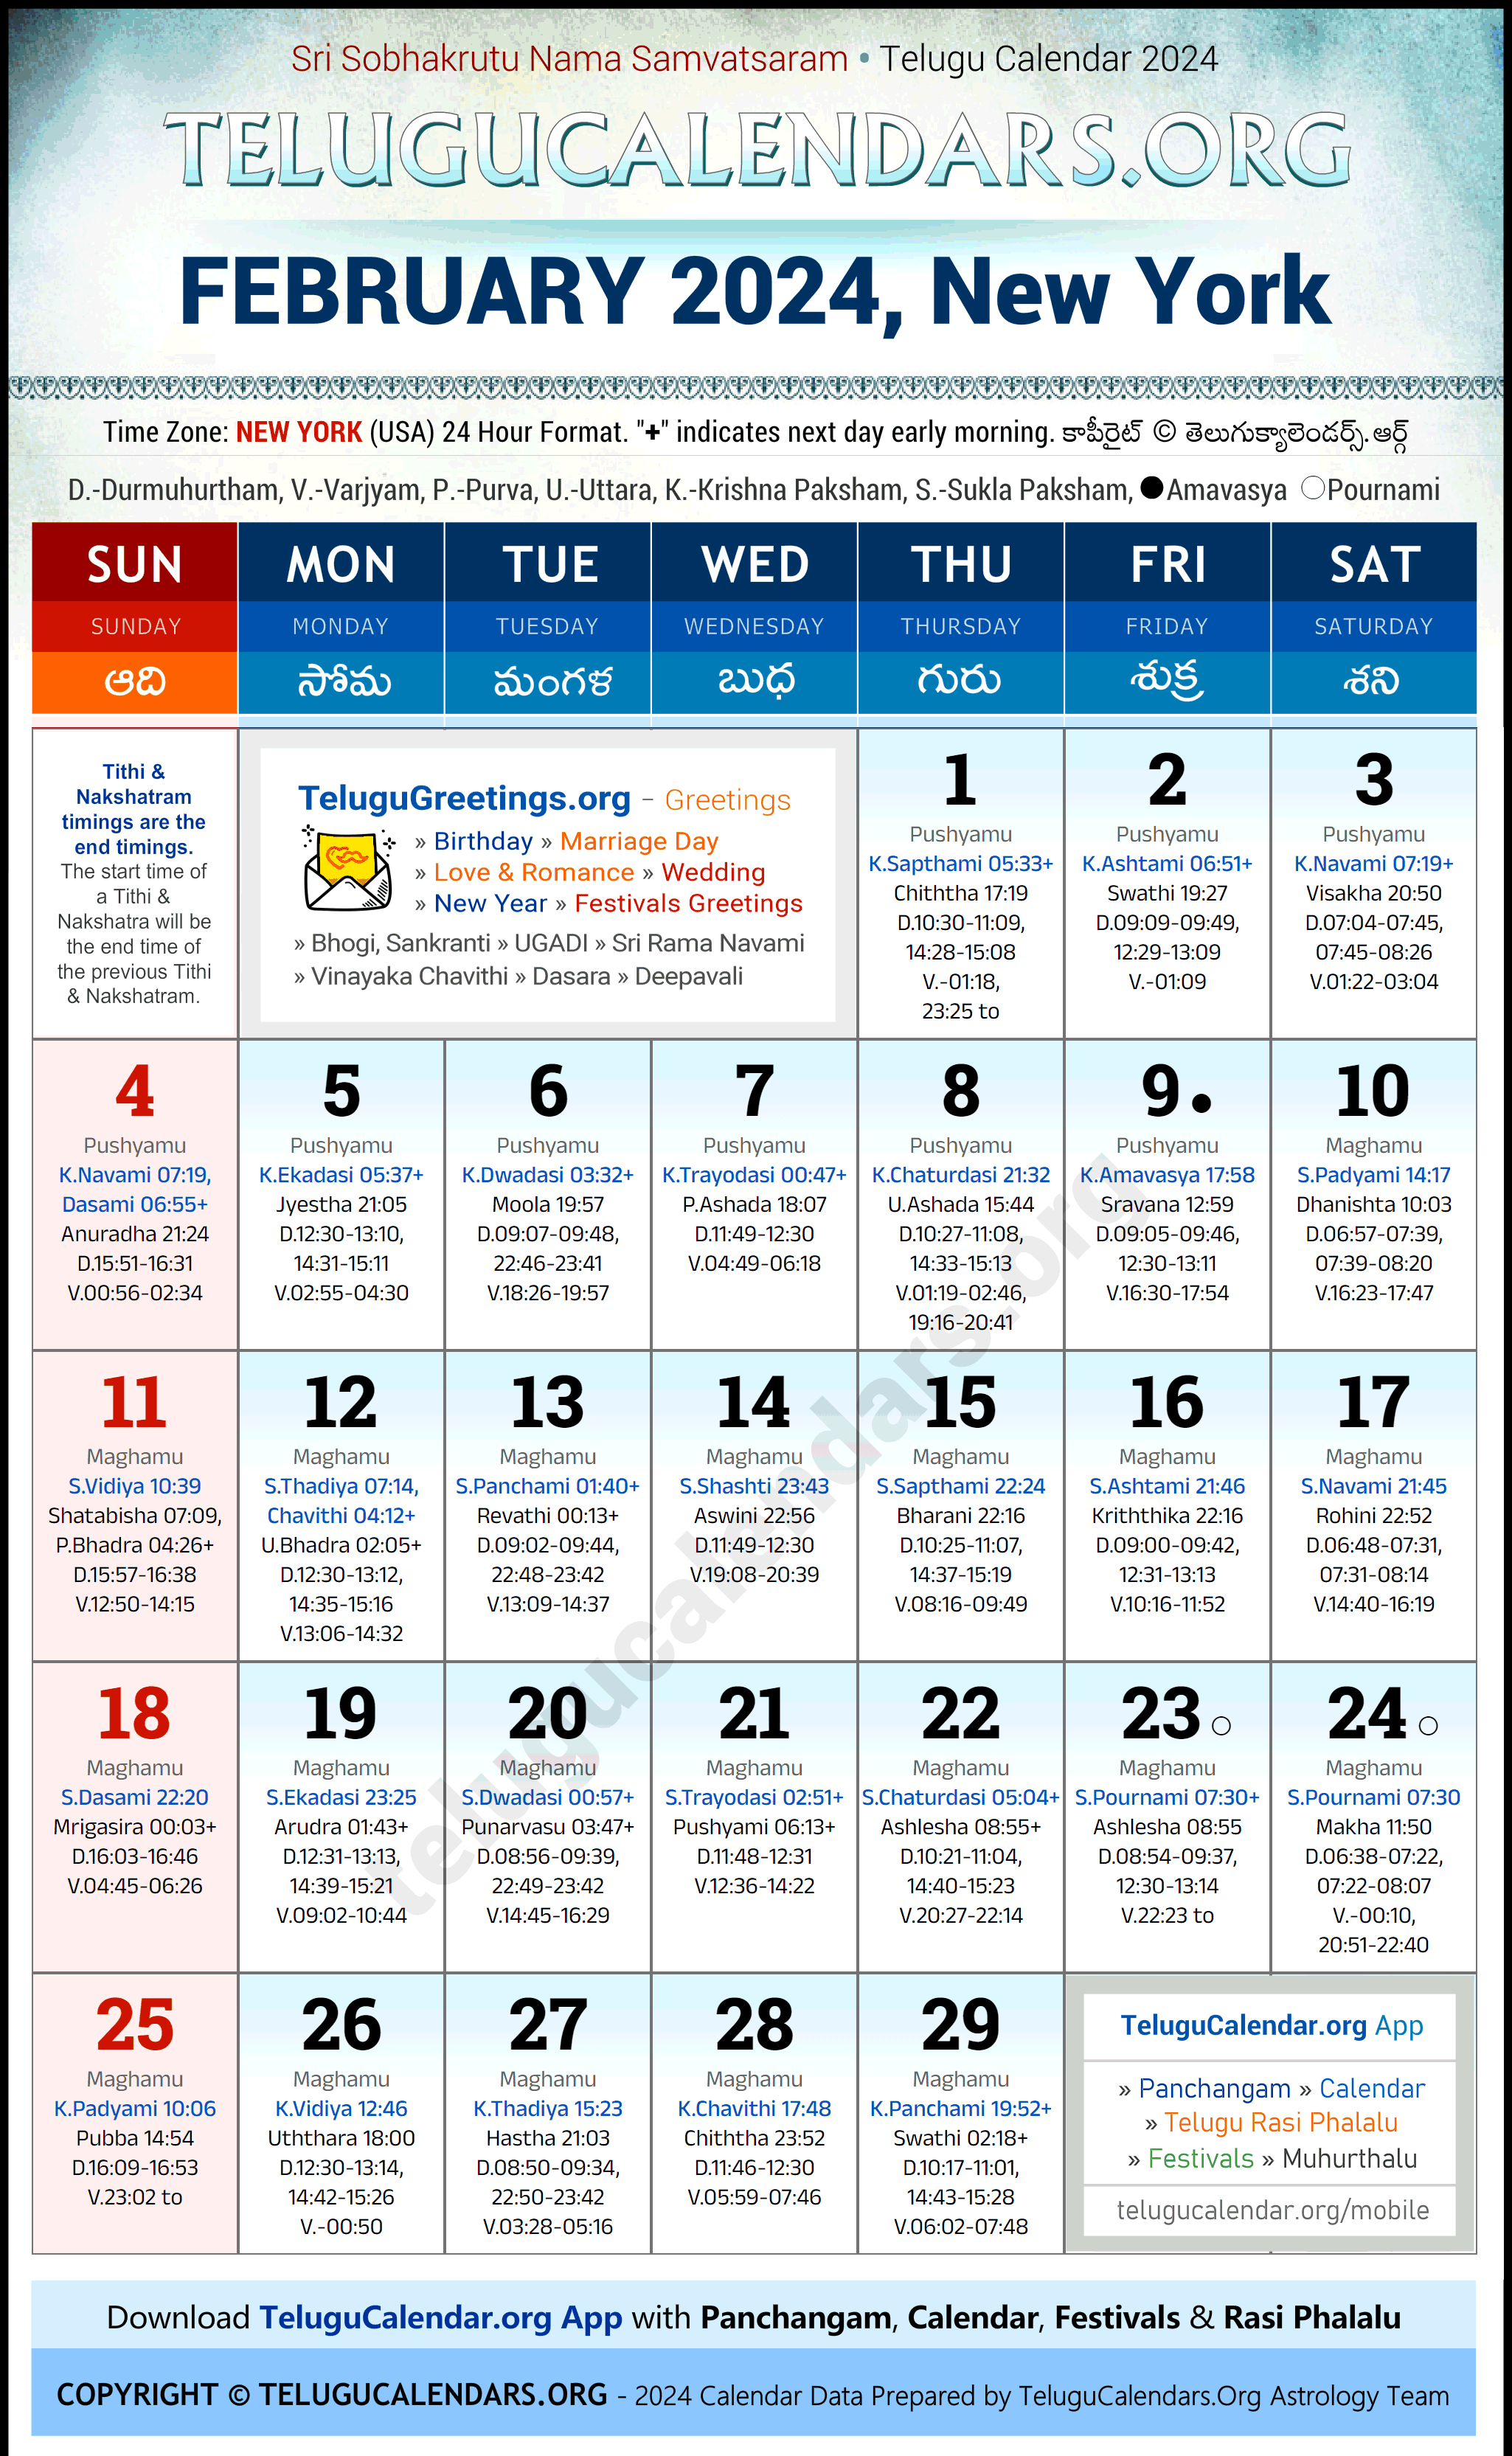 Telugu Calendar 2024 February Festivals for New York